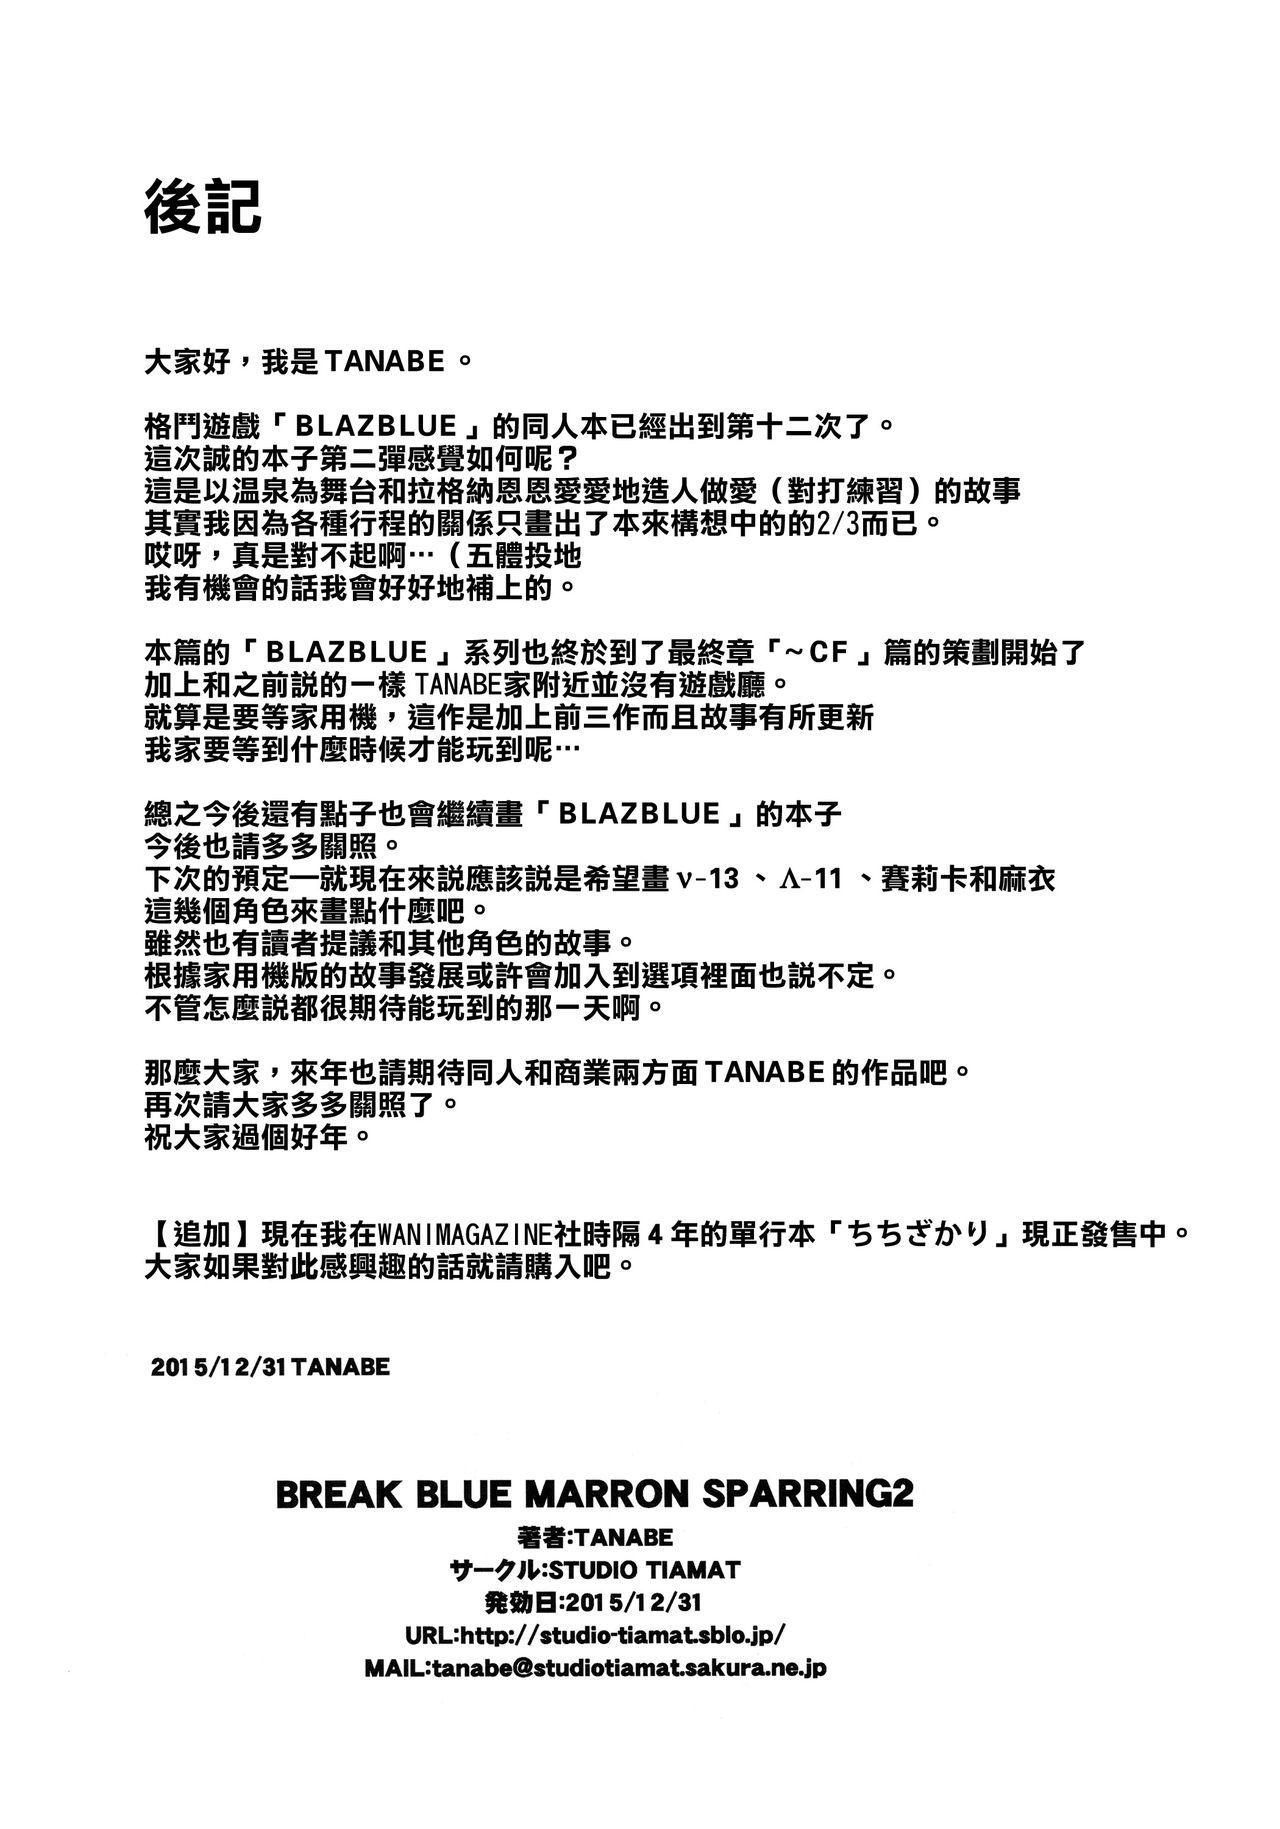 BREAK BLUE MARRON SPARRING2 25